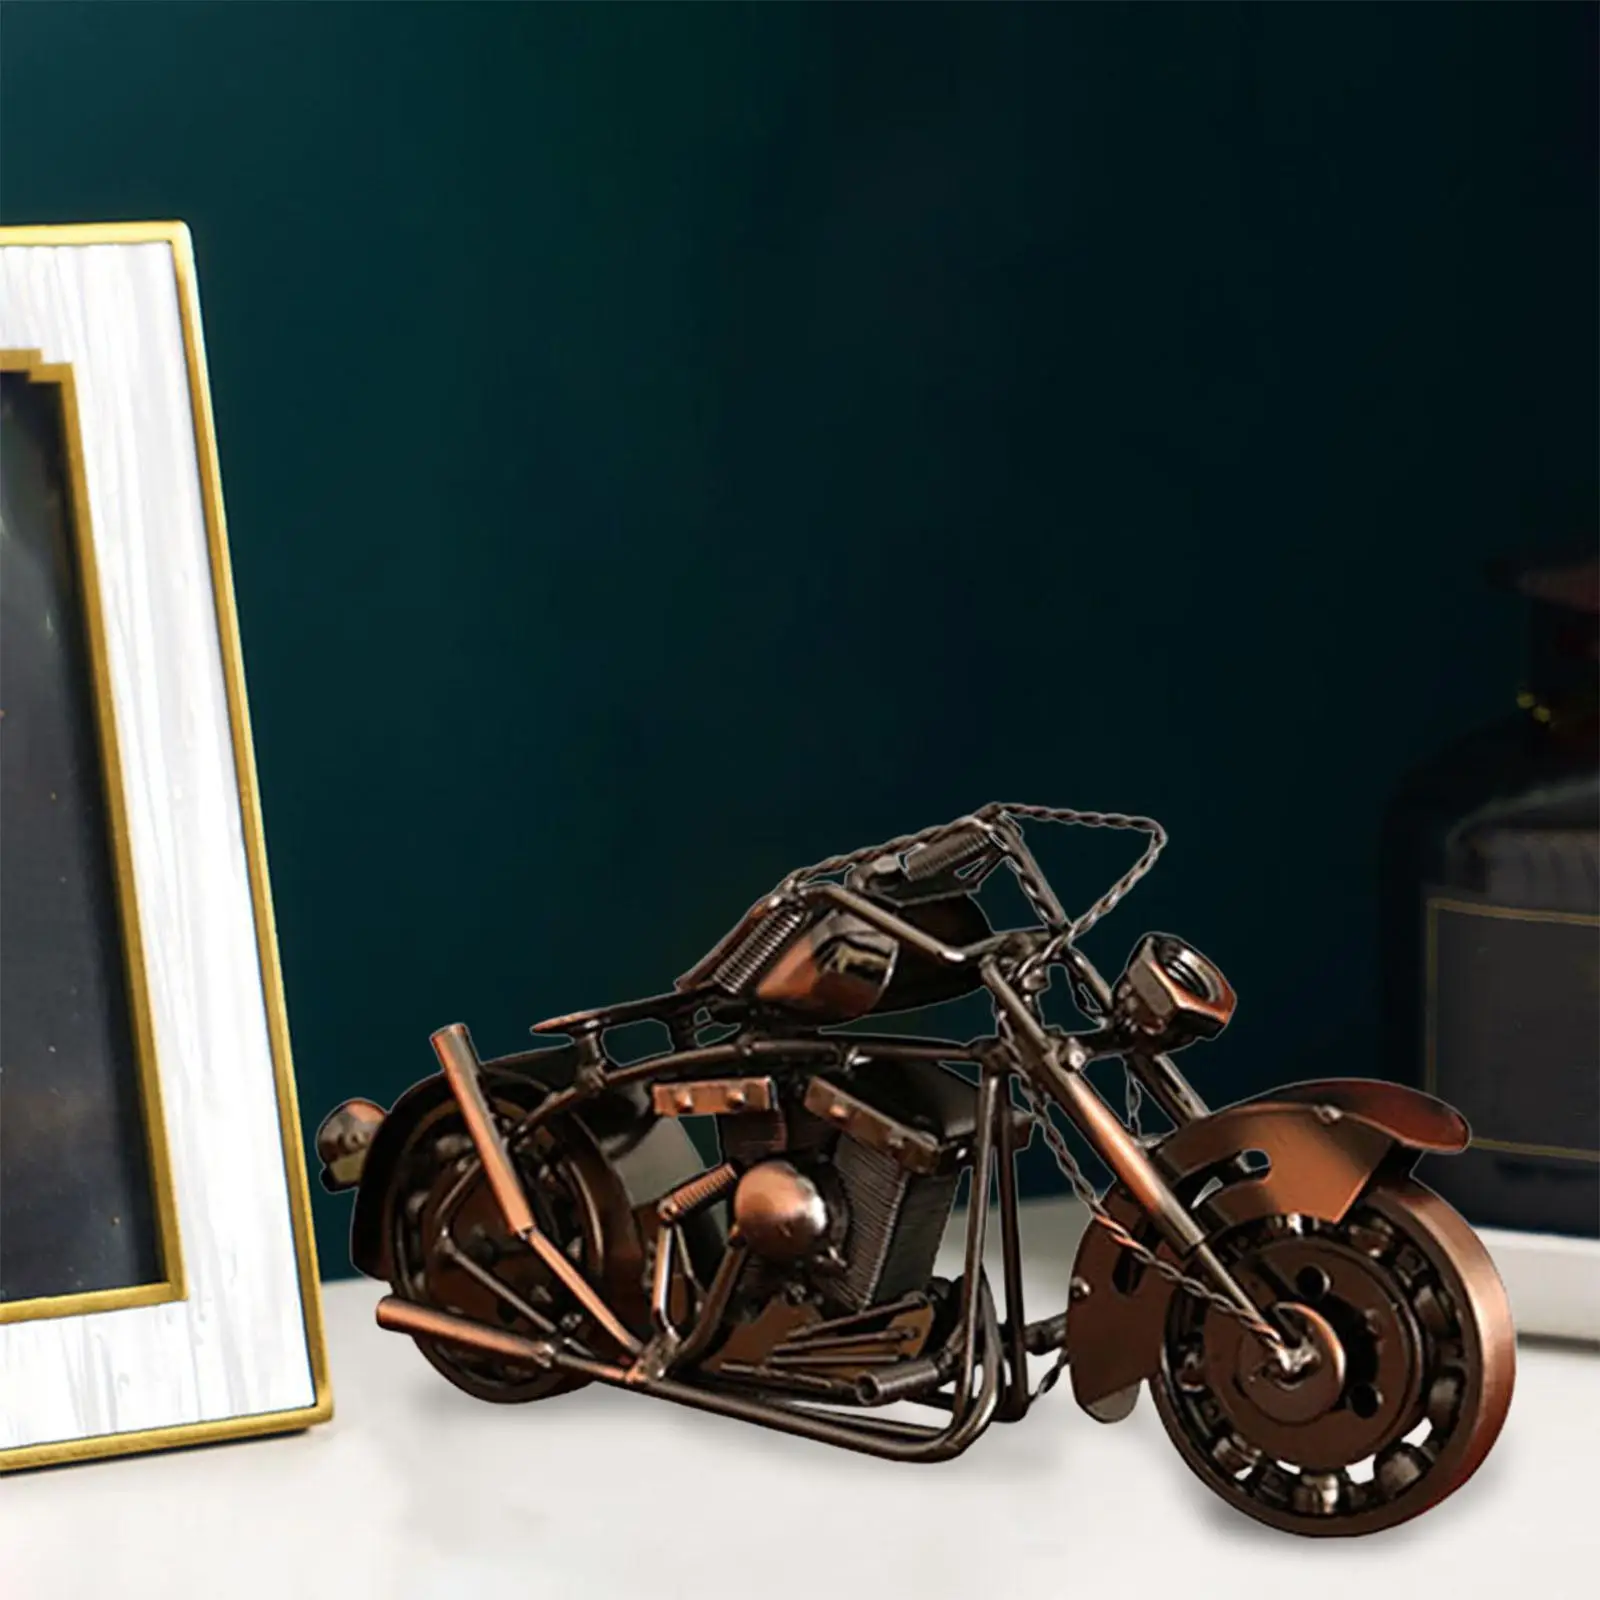 Motorcycle Model Motorbike Iron Art Sculpture Collection Versatile Sturdy